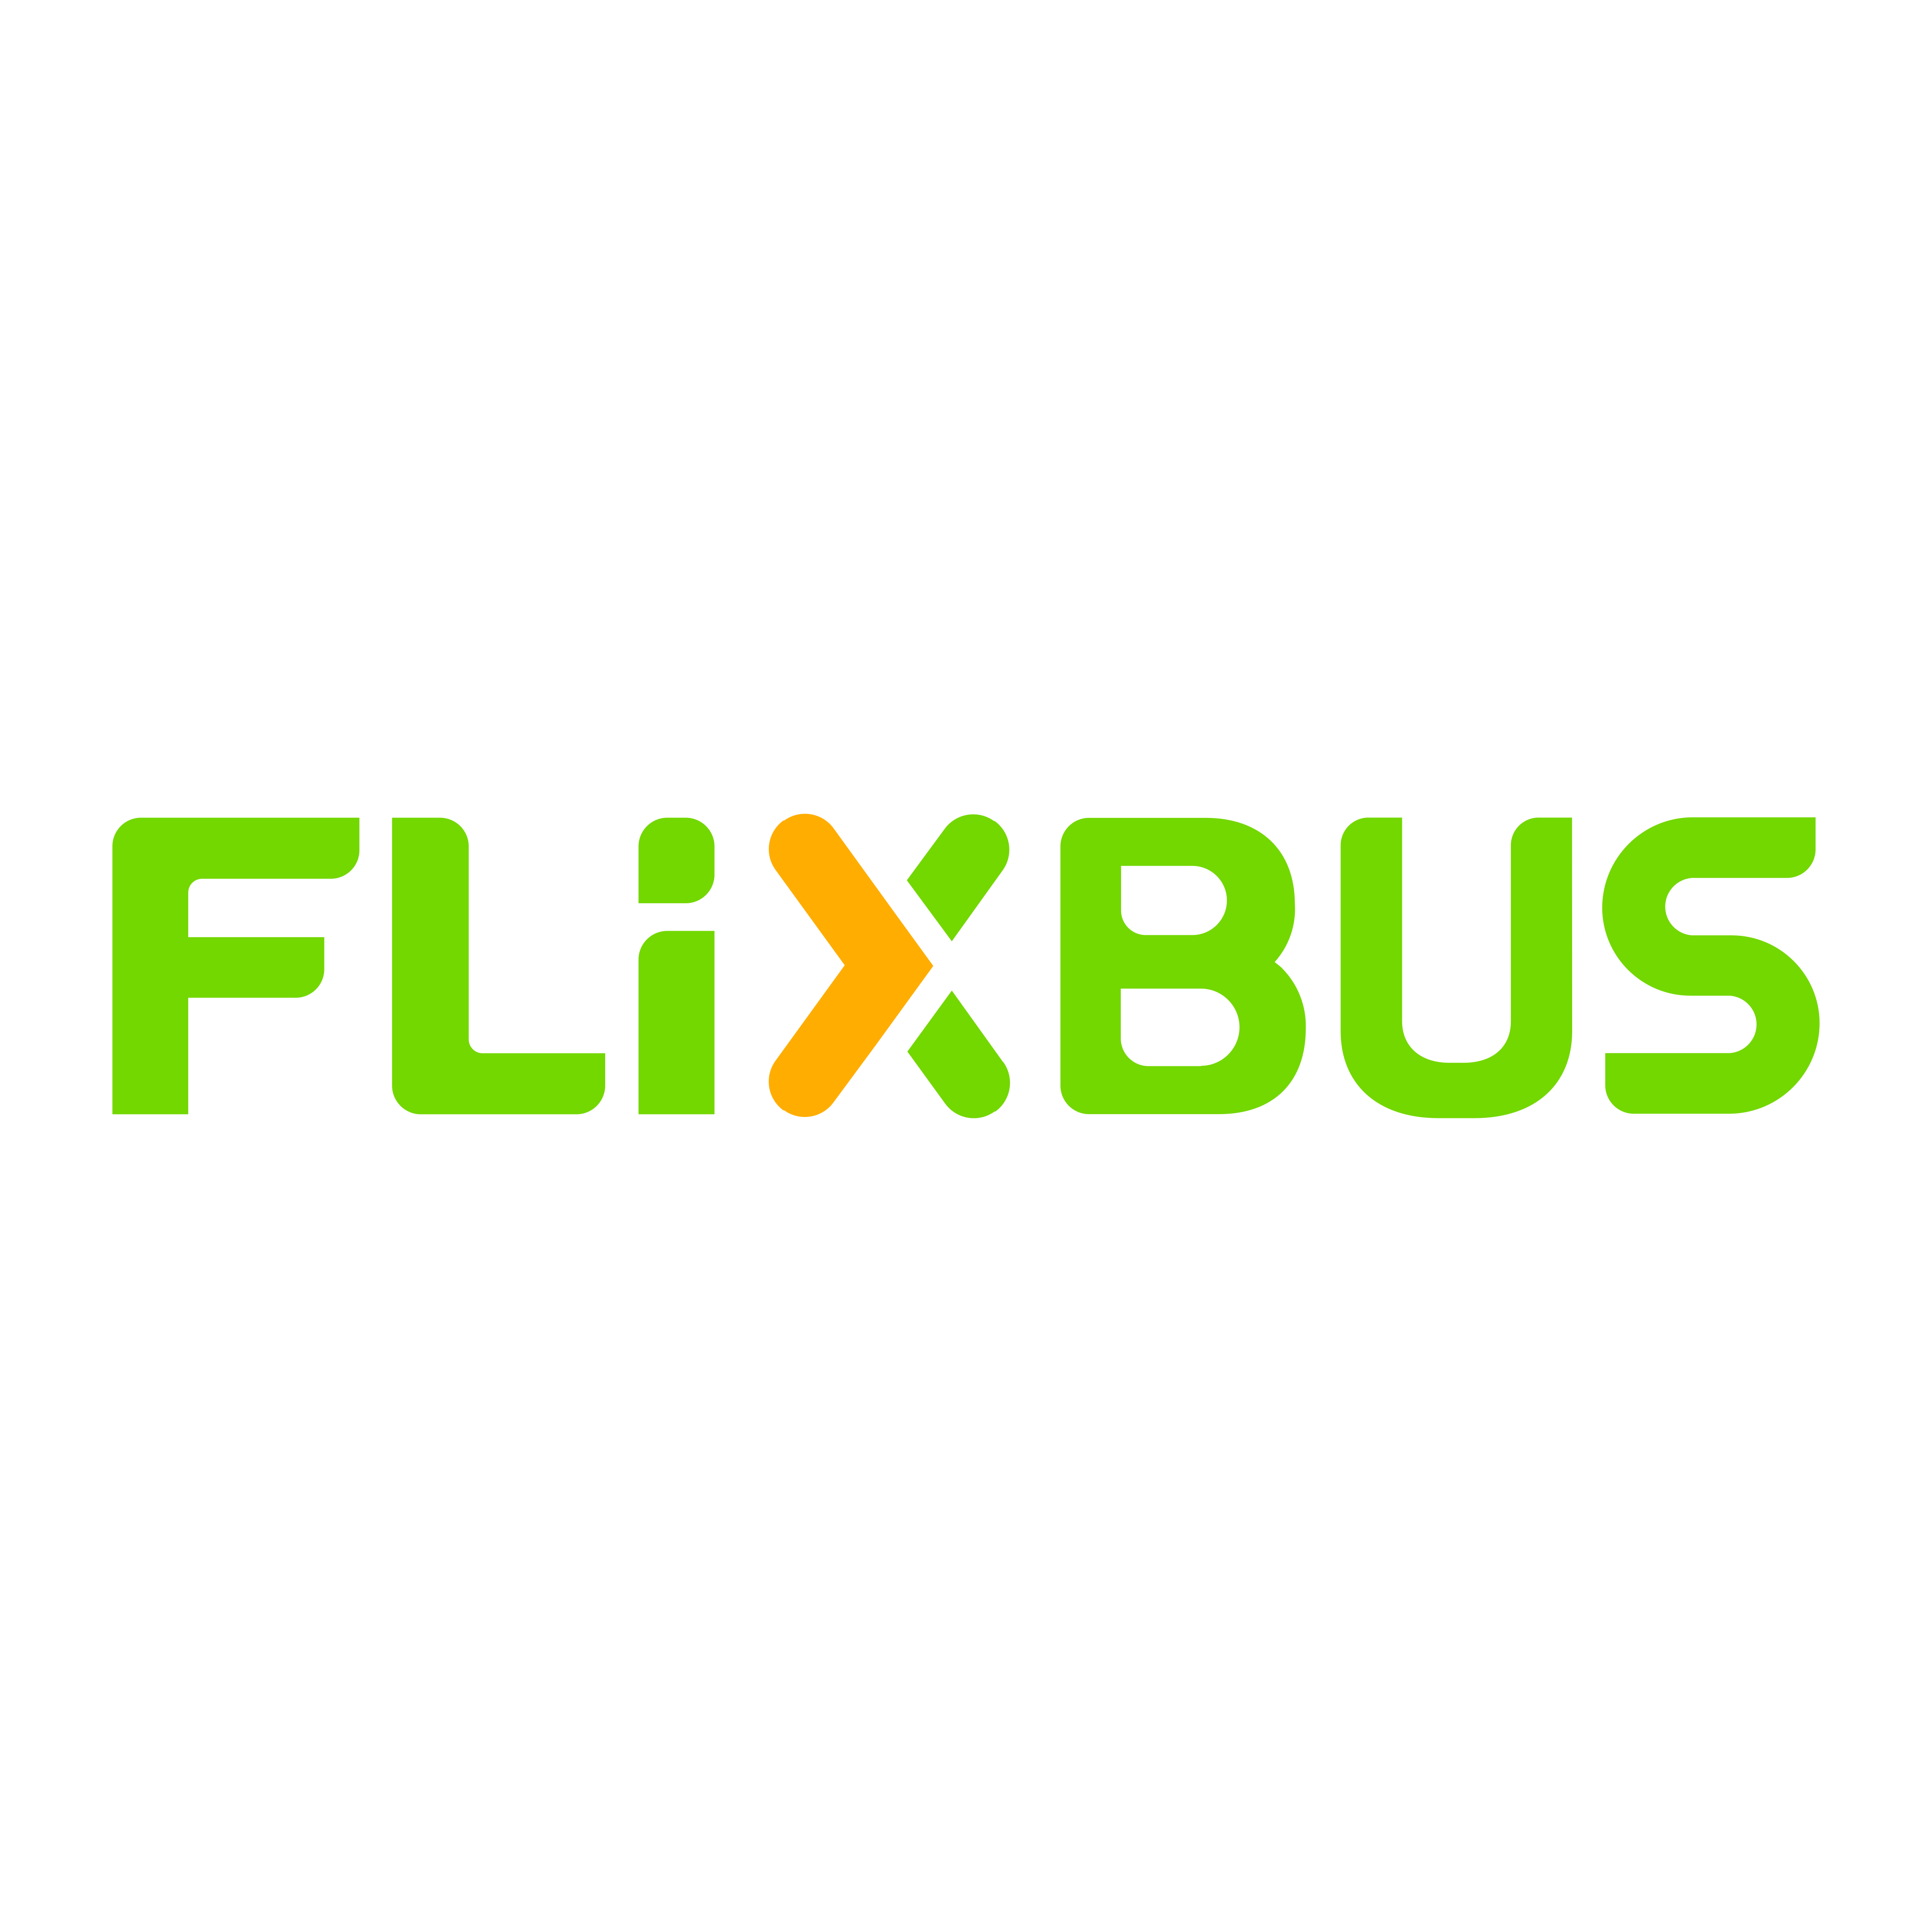 flixbus logo 0 - Flixbus Logo